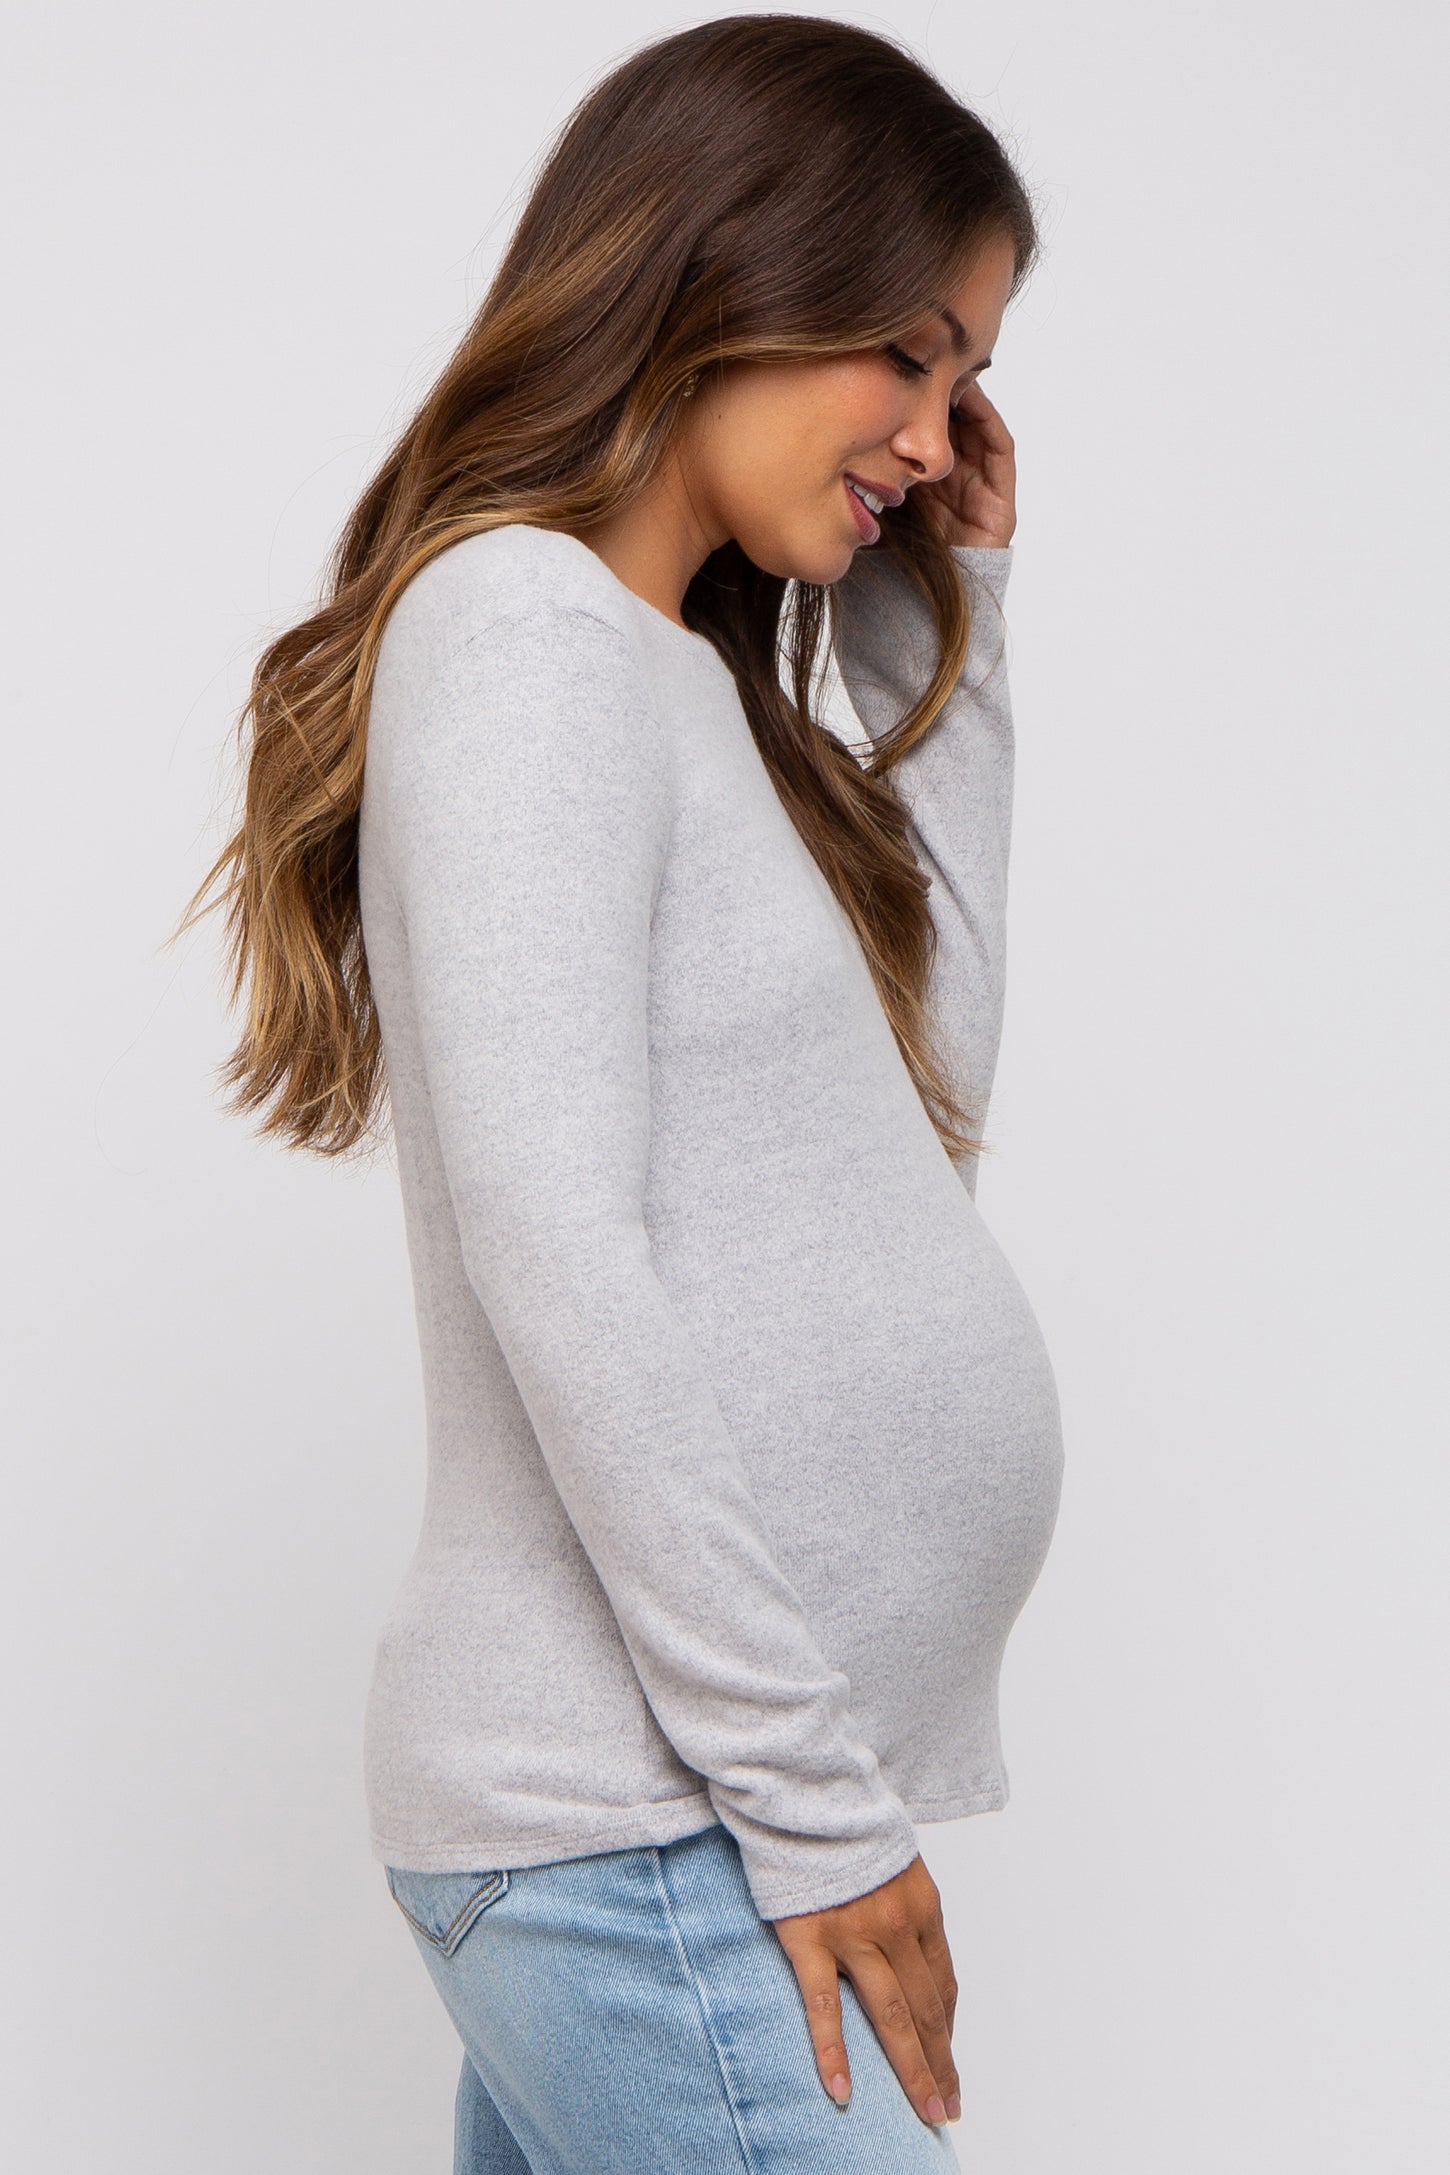 Heather Grey Soft Brushed Maternity Long Sleeve Top– PinkBlush